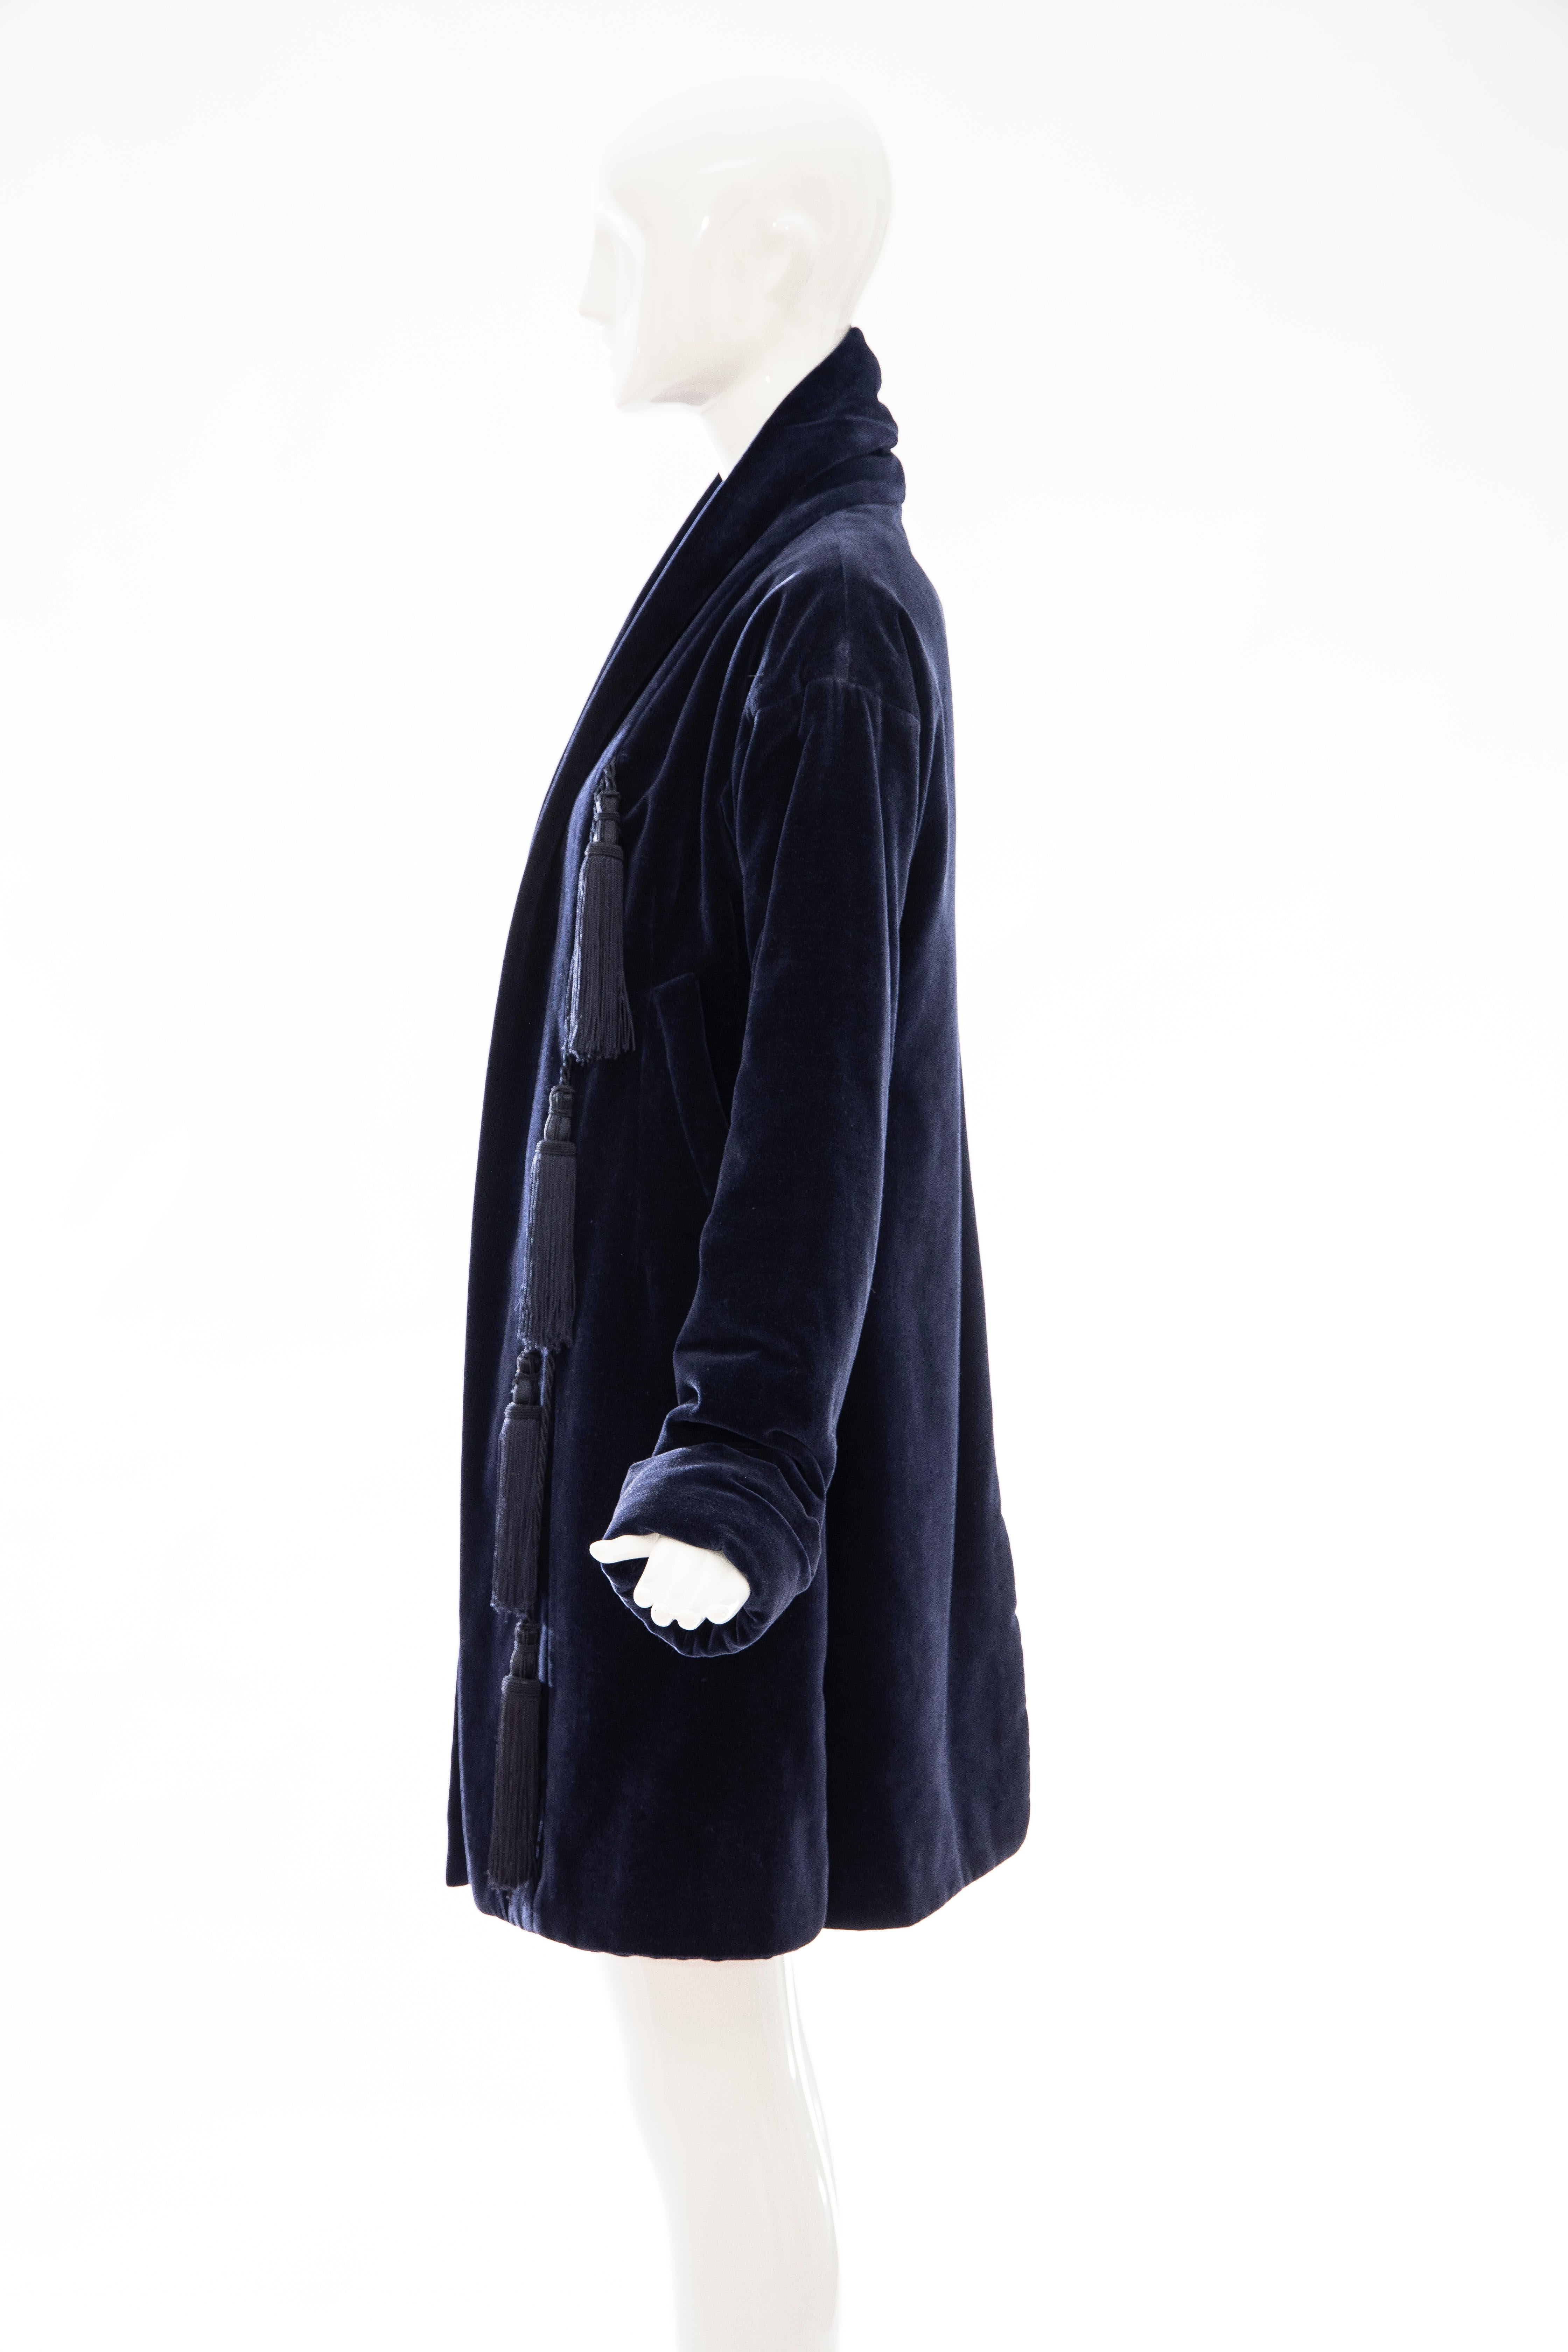 Romeo Gigli Navy Blue Cotton Velvet Appliquéd Tassels Kimono Jacket, Fall 1994 For Sale 3